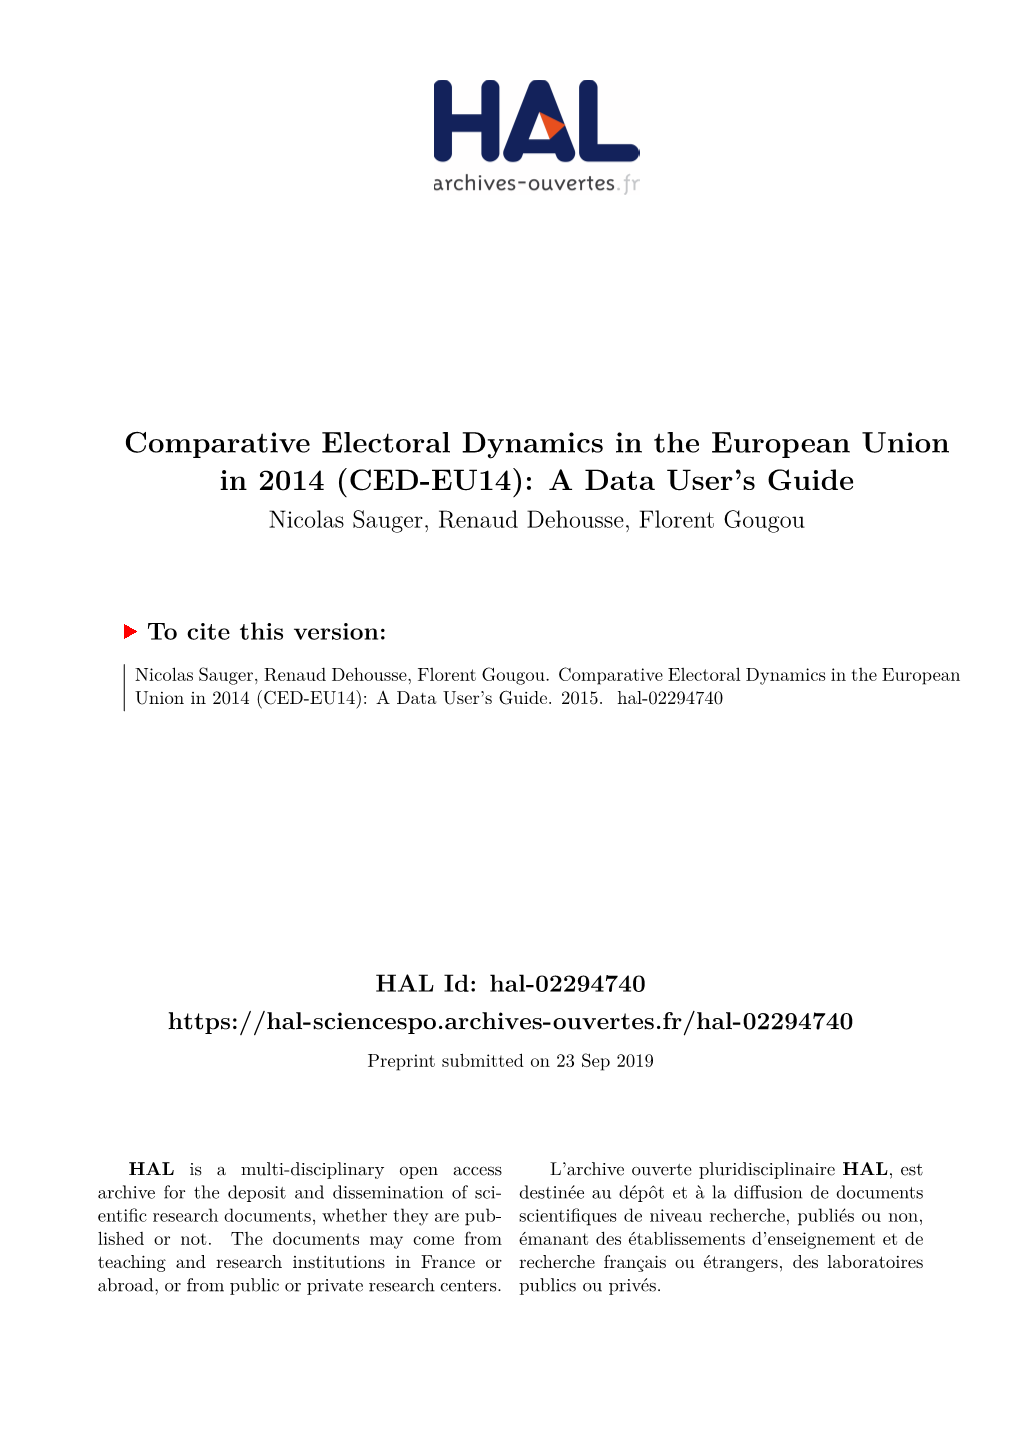 Comparative Electoral Dynamics in the European Union in 2014 (CED-EU14): a Data User’S Guide Nicolas Sauger, Renaud Dehousse, Florent Gougou